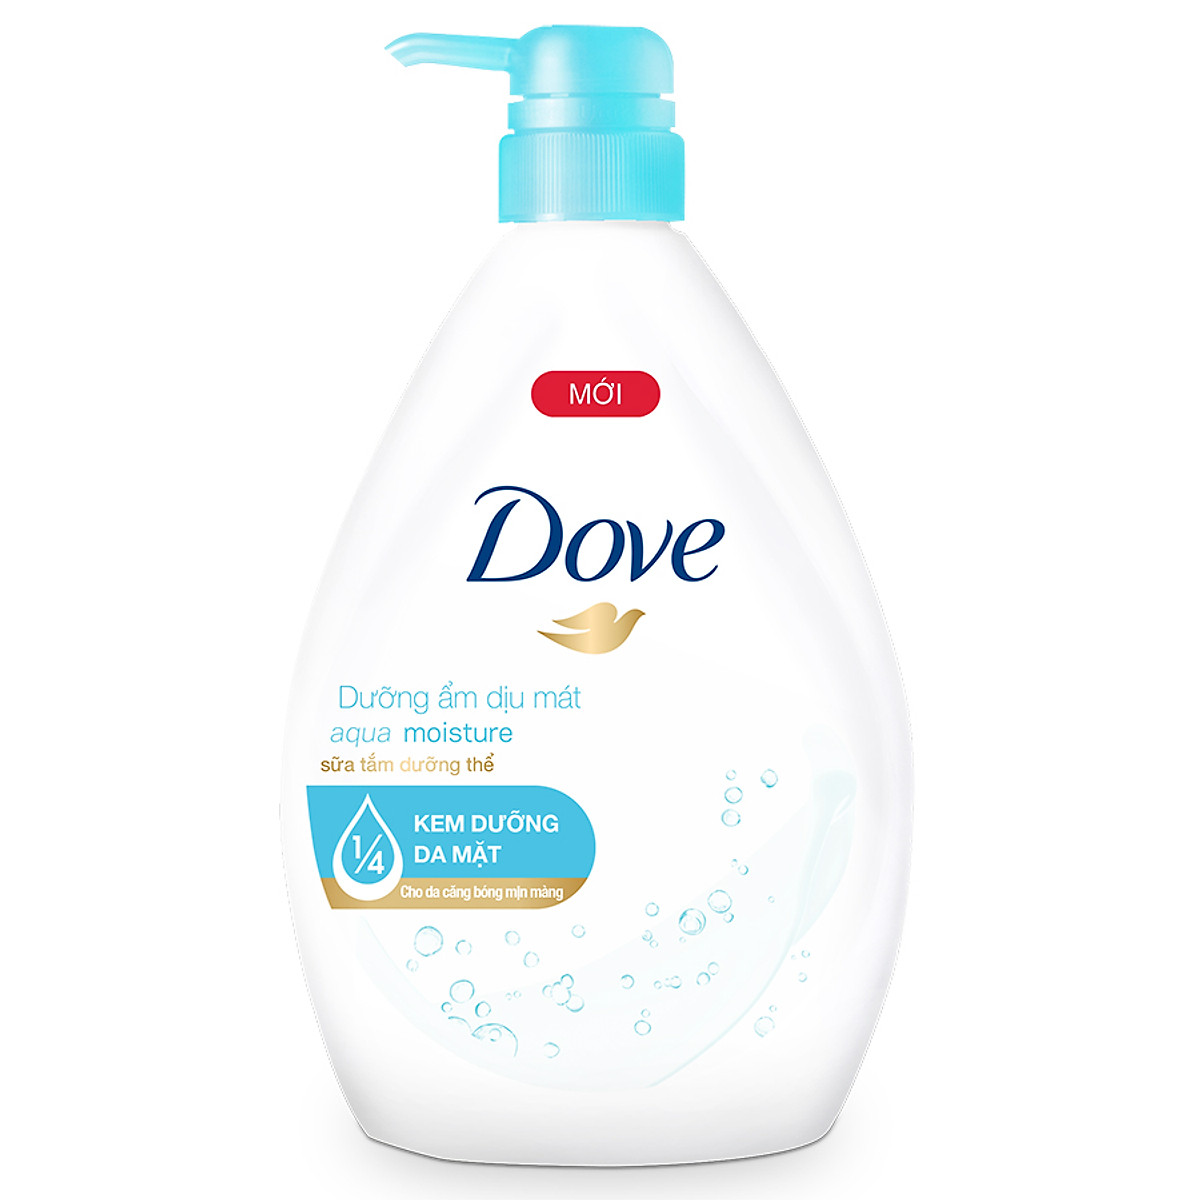 Dove Aqua Moisture tích hợp 1/4 kem dưỡng da mặt